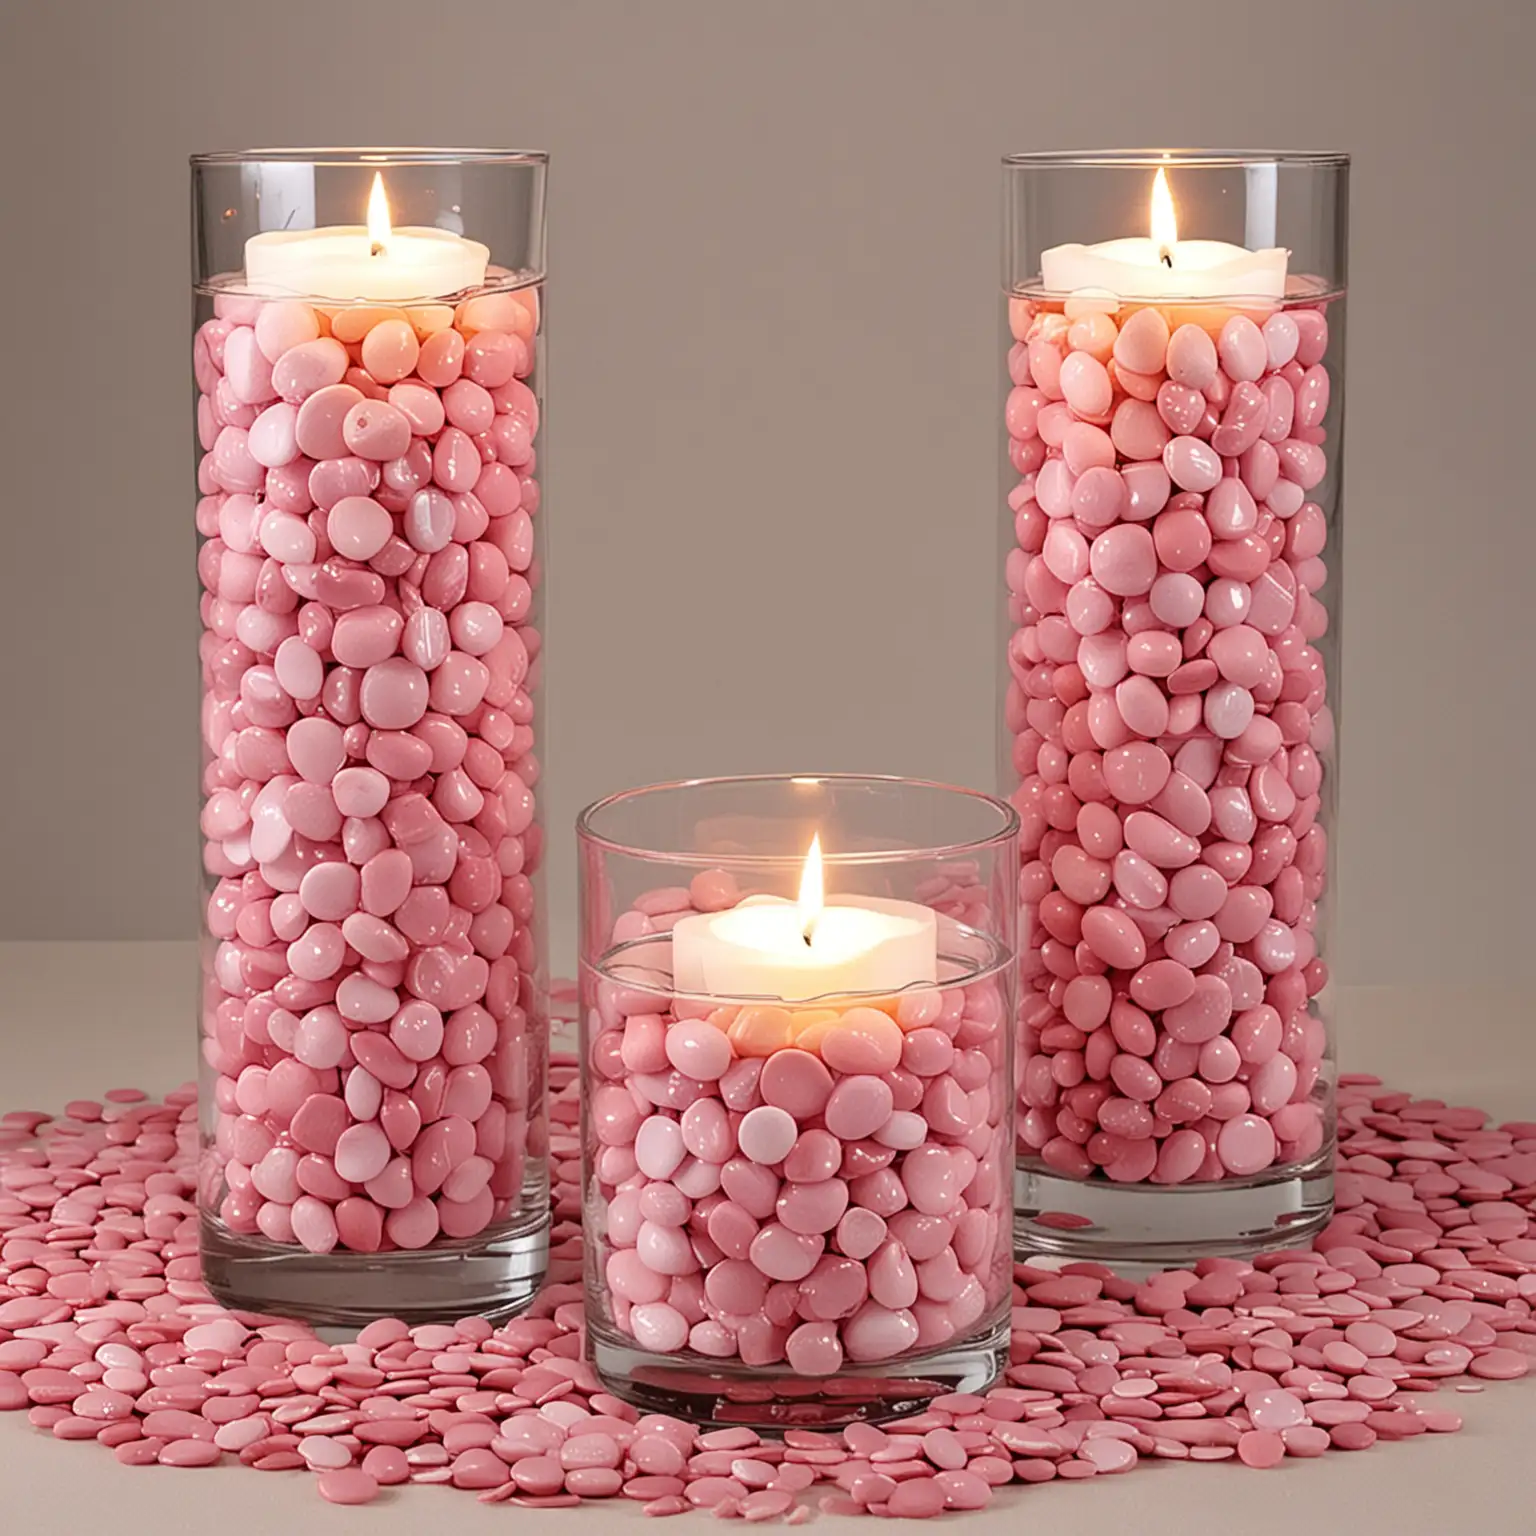 Elegant-DIY-Wedding-Centerpiece-Pink-Pebble-Adorned-Glass-Vase